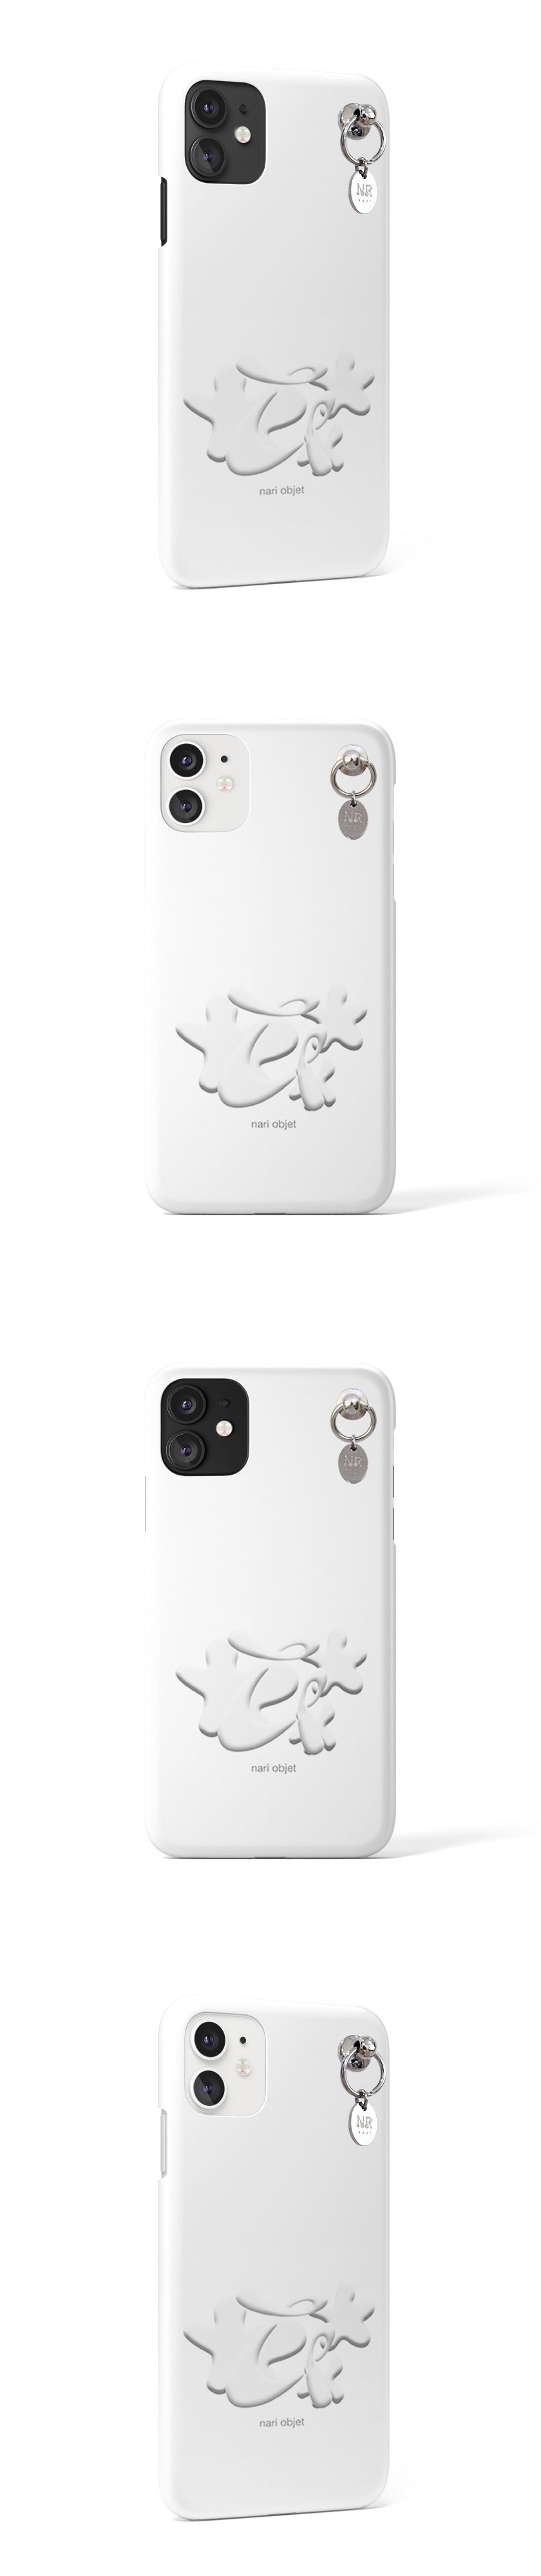 Nari iconic hard phone case (white/matte)